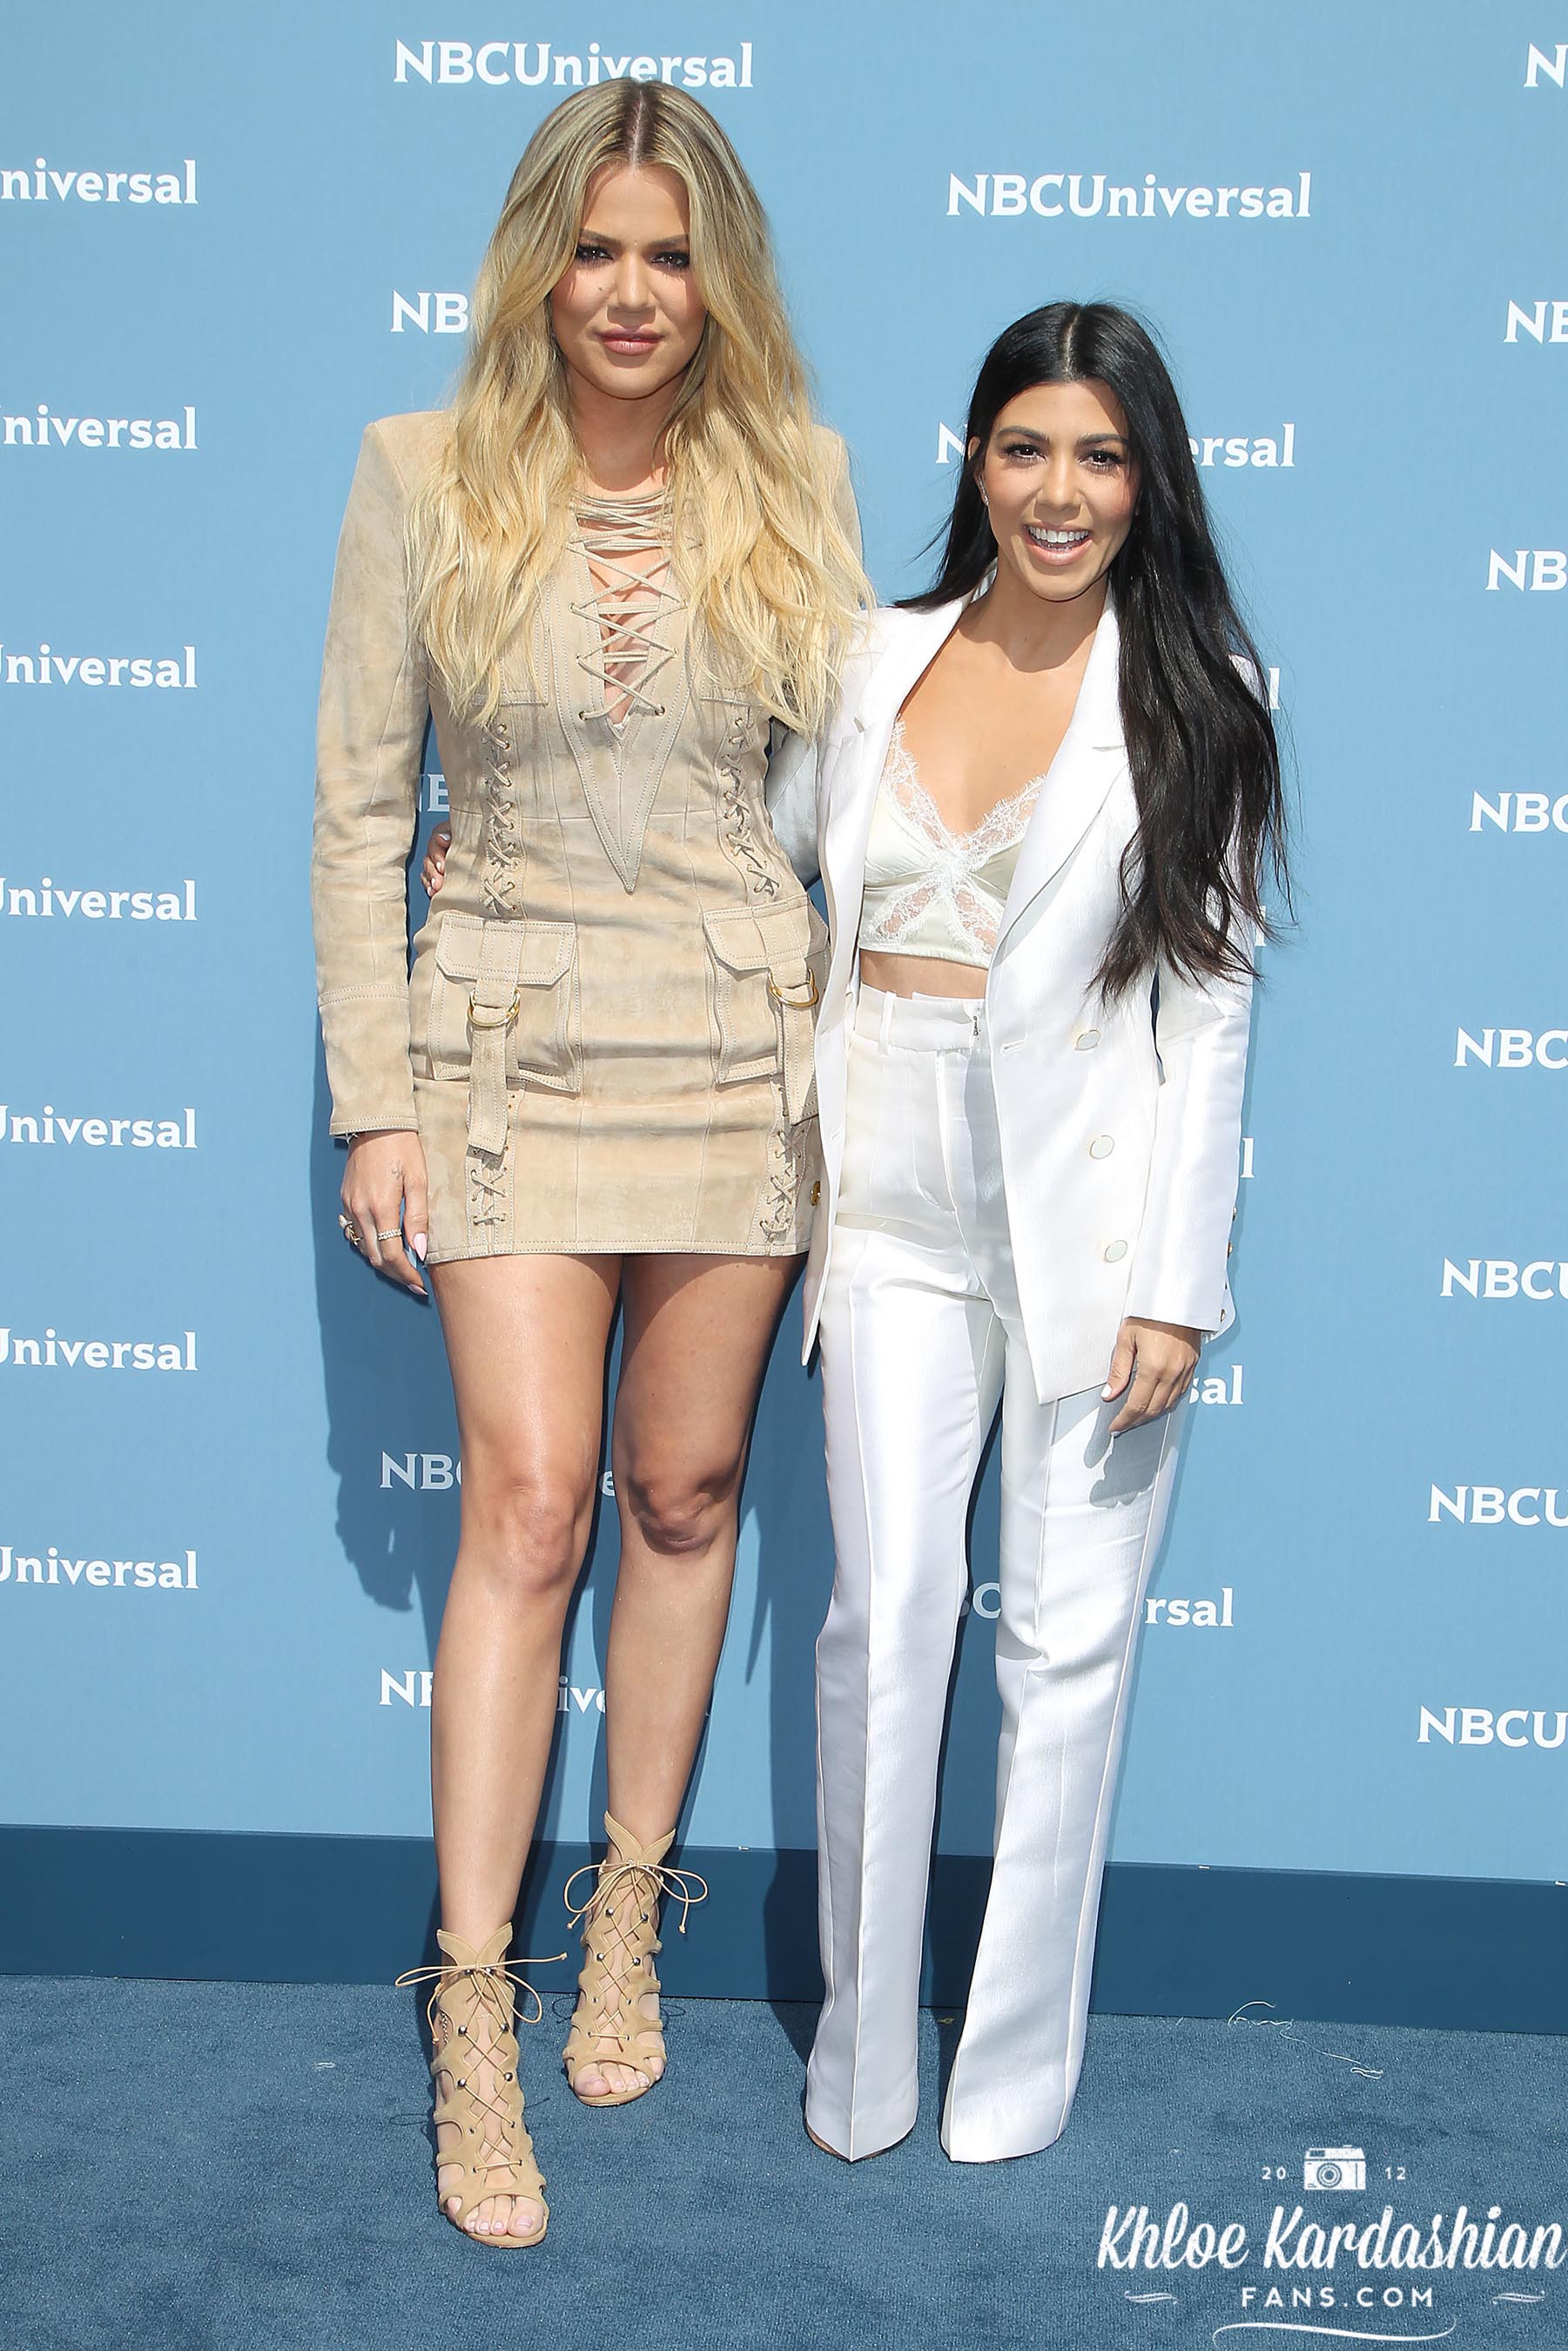 Khloe Kardashian attends NBCUniversal 2016 Upfront